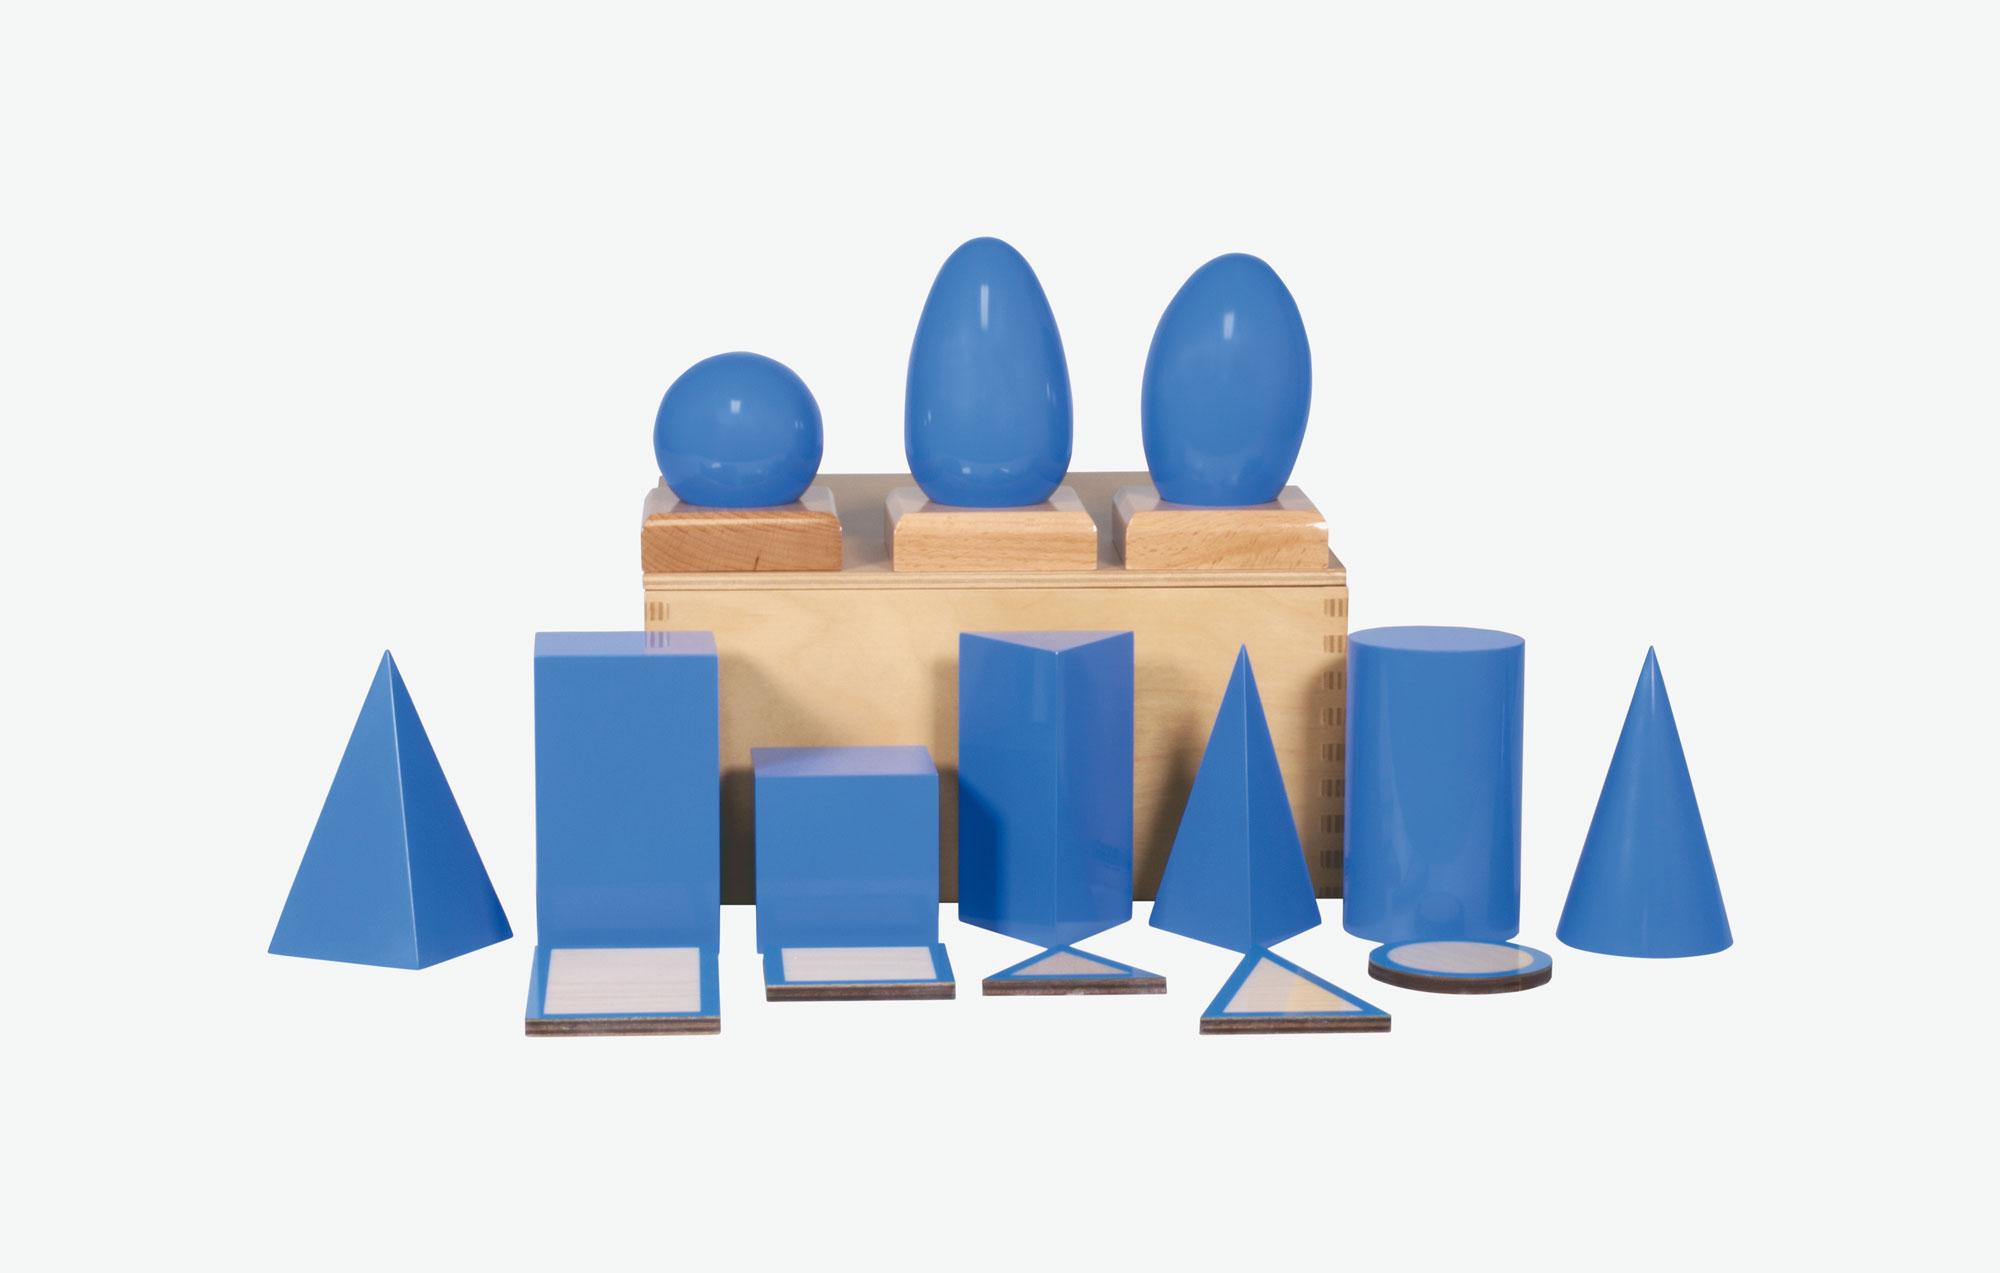 Cool Designs for Cultured Kids – Montessori Geometric Solids